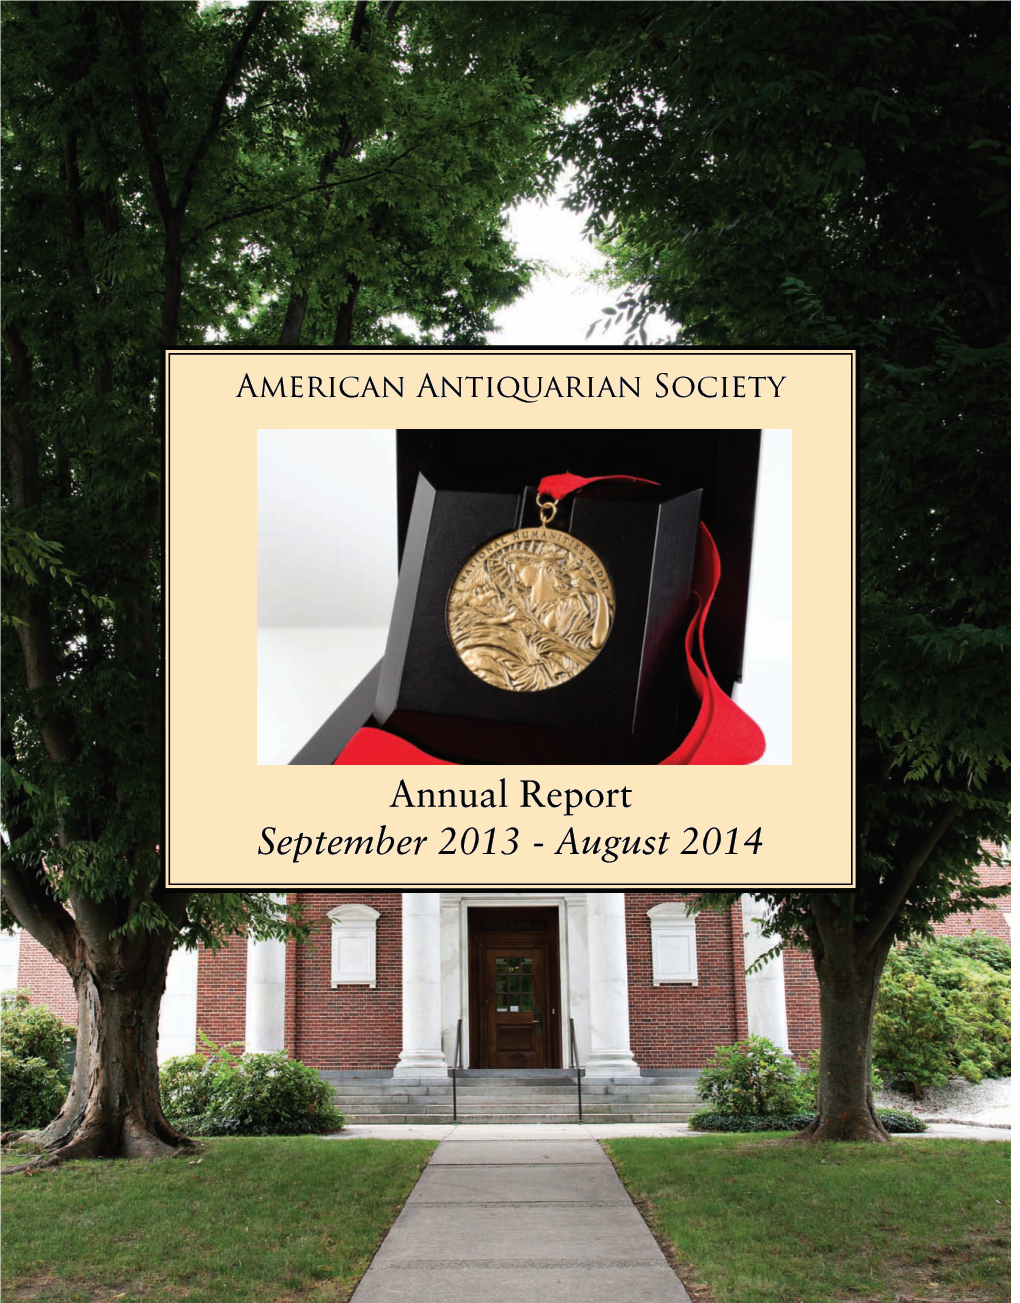 August 2014 Annual Report September 2013